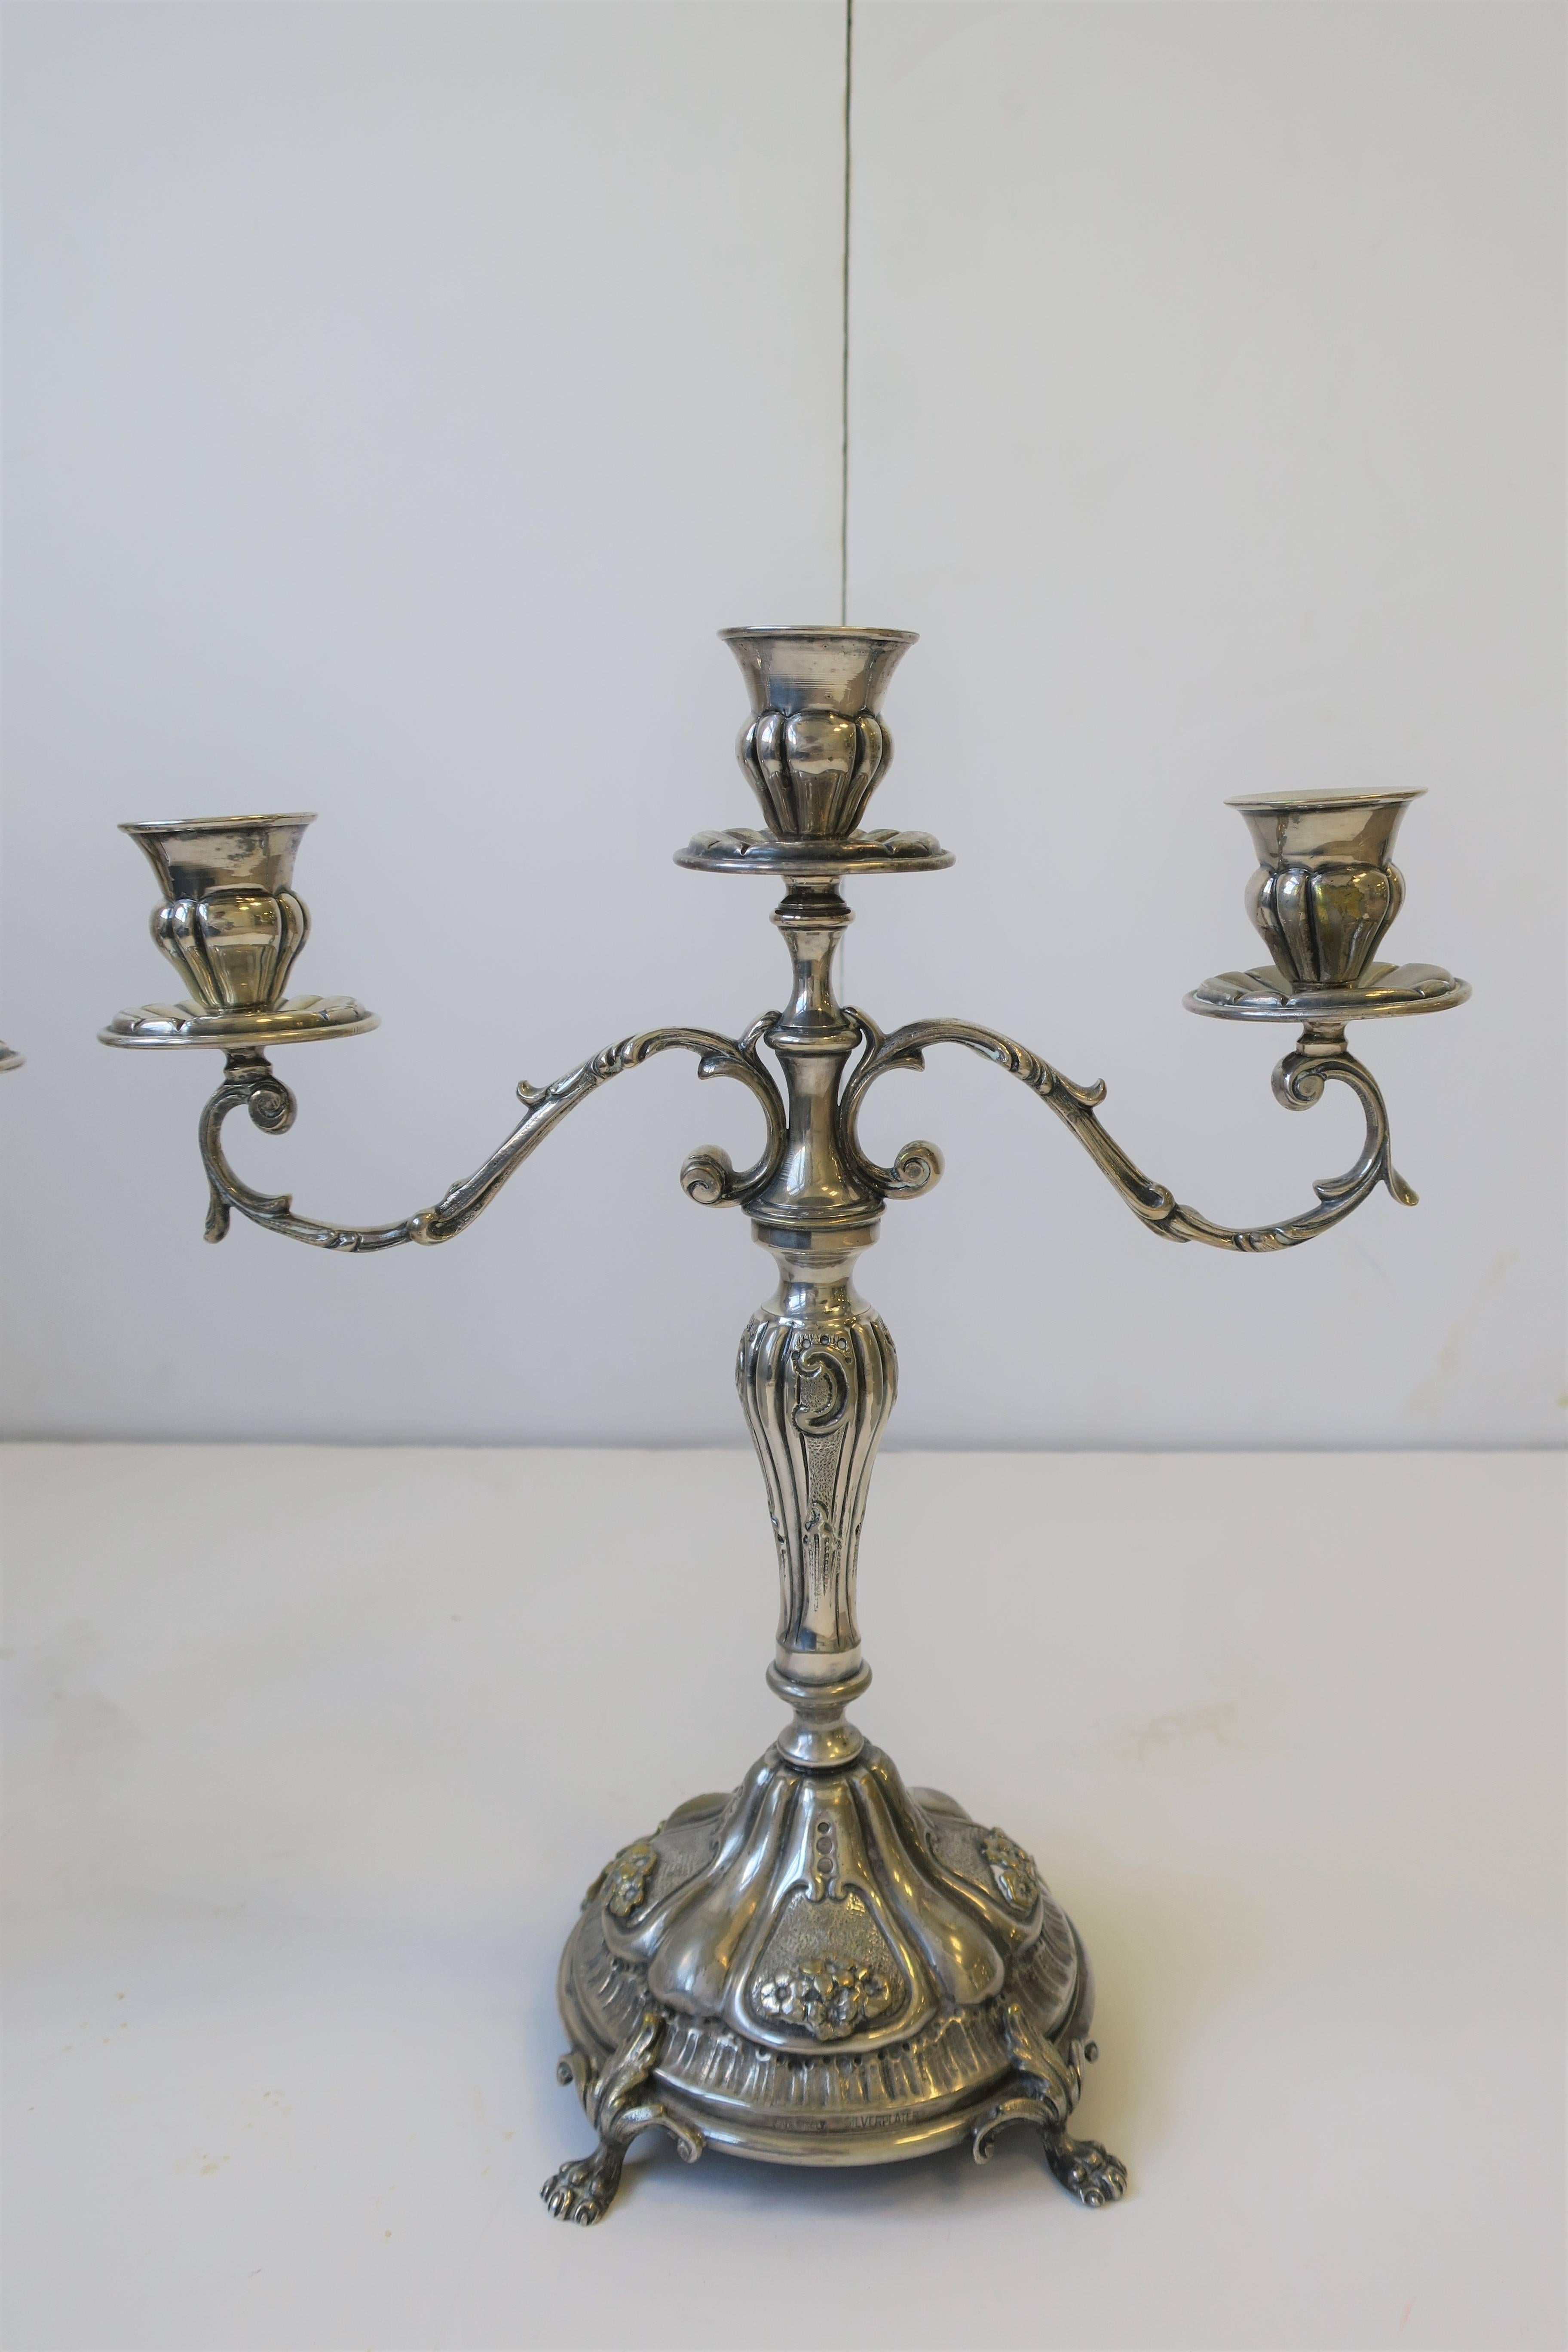 20th Century Italian Regency Sterling Silver Plate Candlesticks or Candelabras, Pair